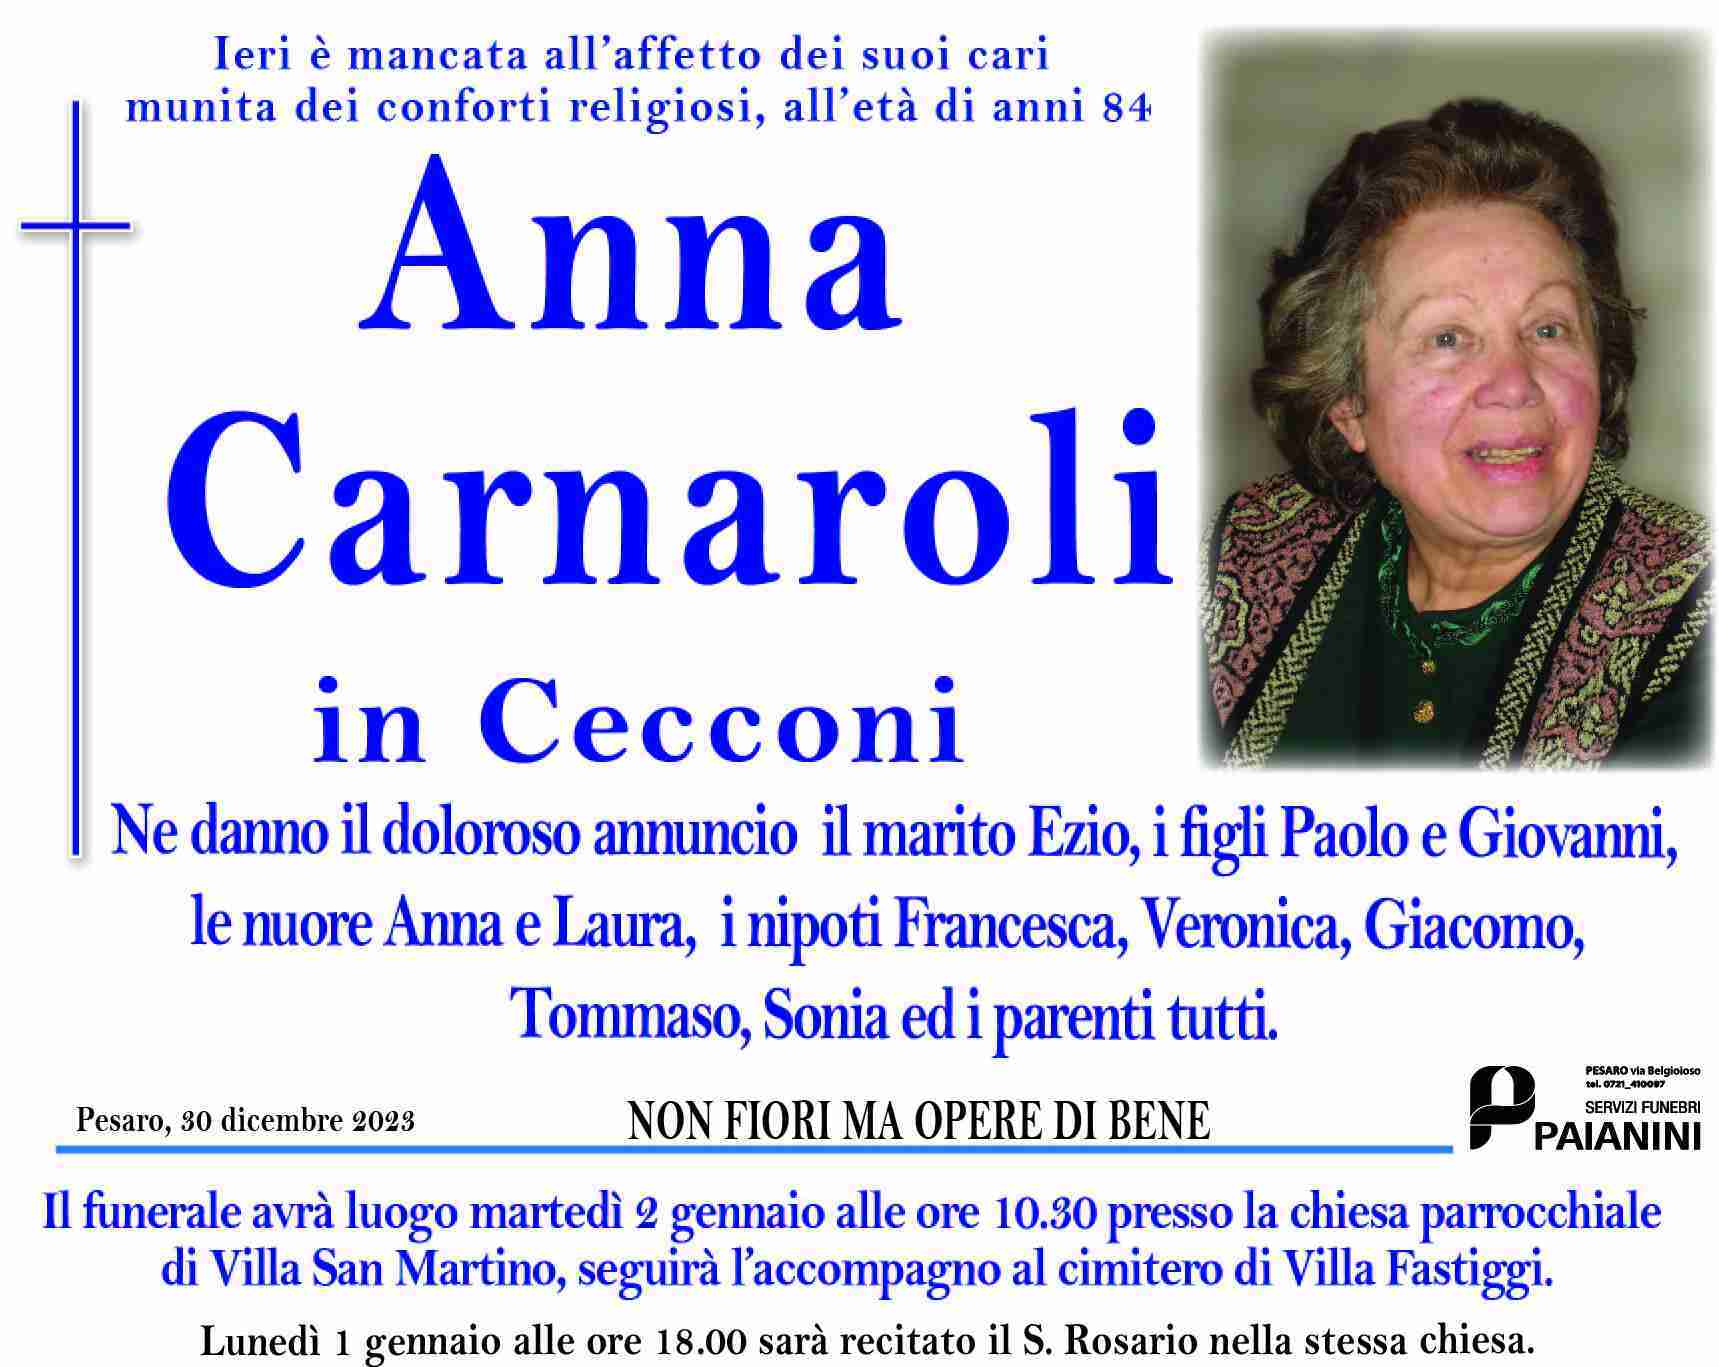 Anna Carnaroli